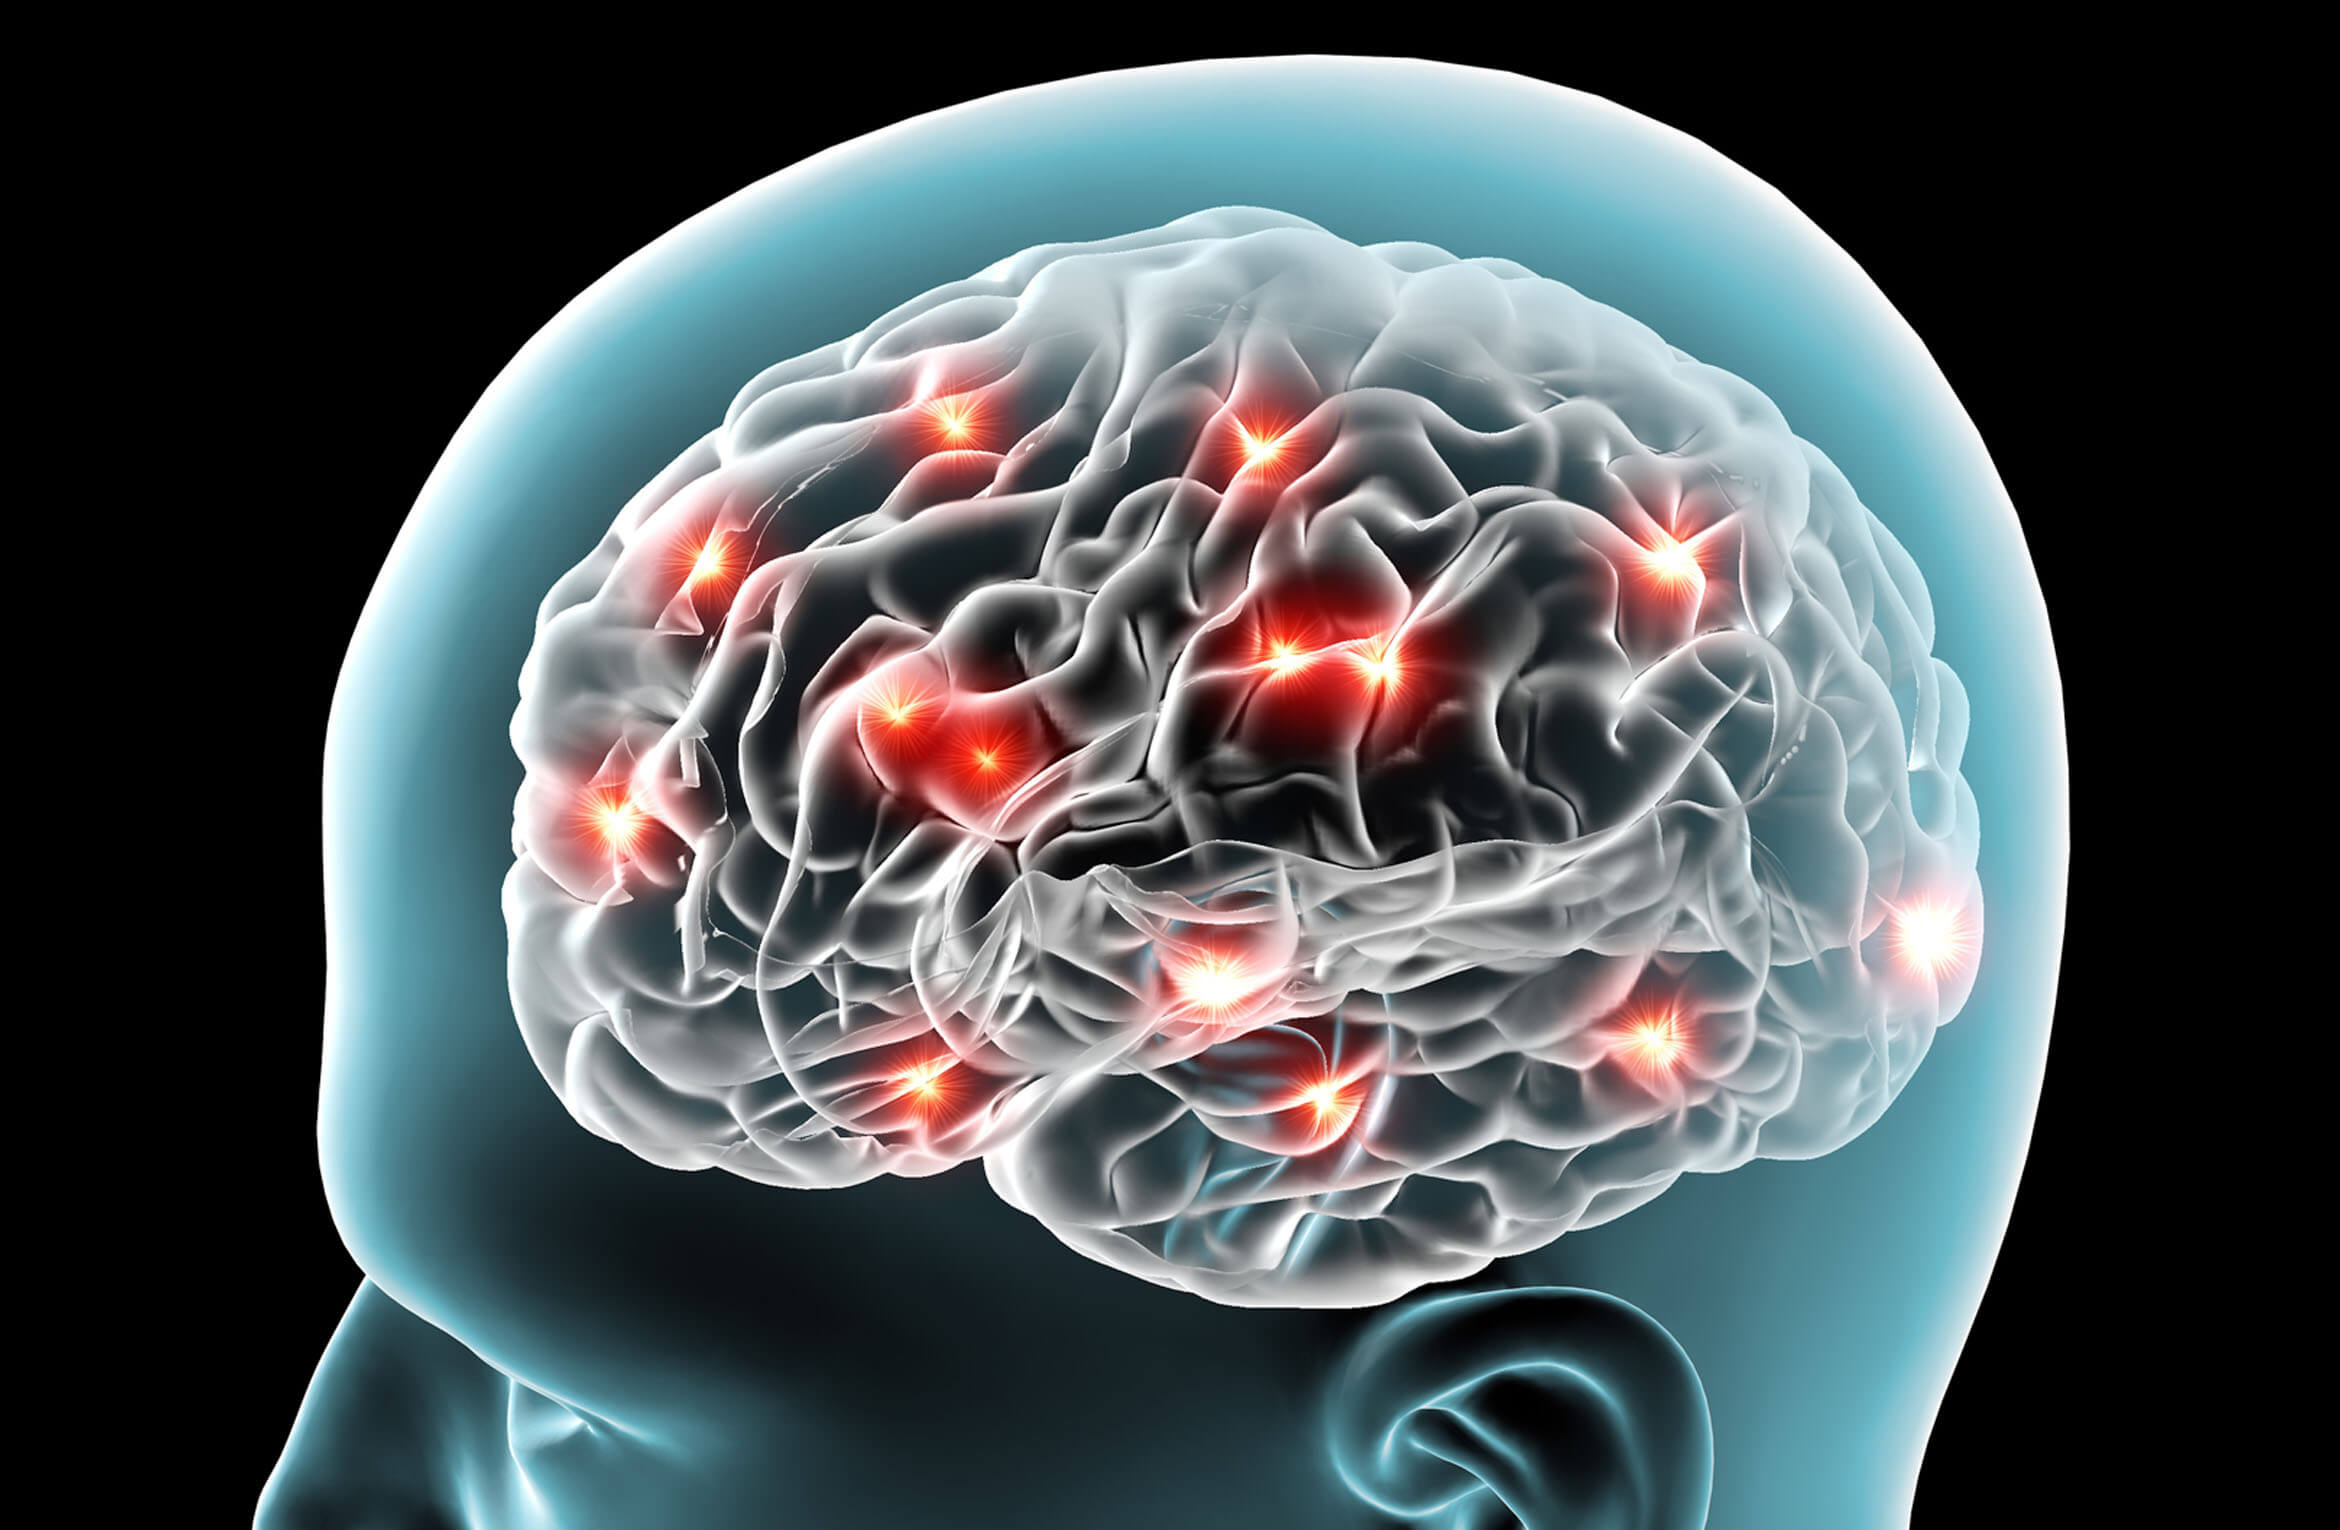 latest findings in research regarding neuroscience and brain development